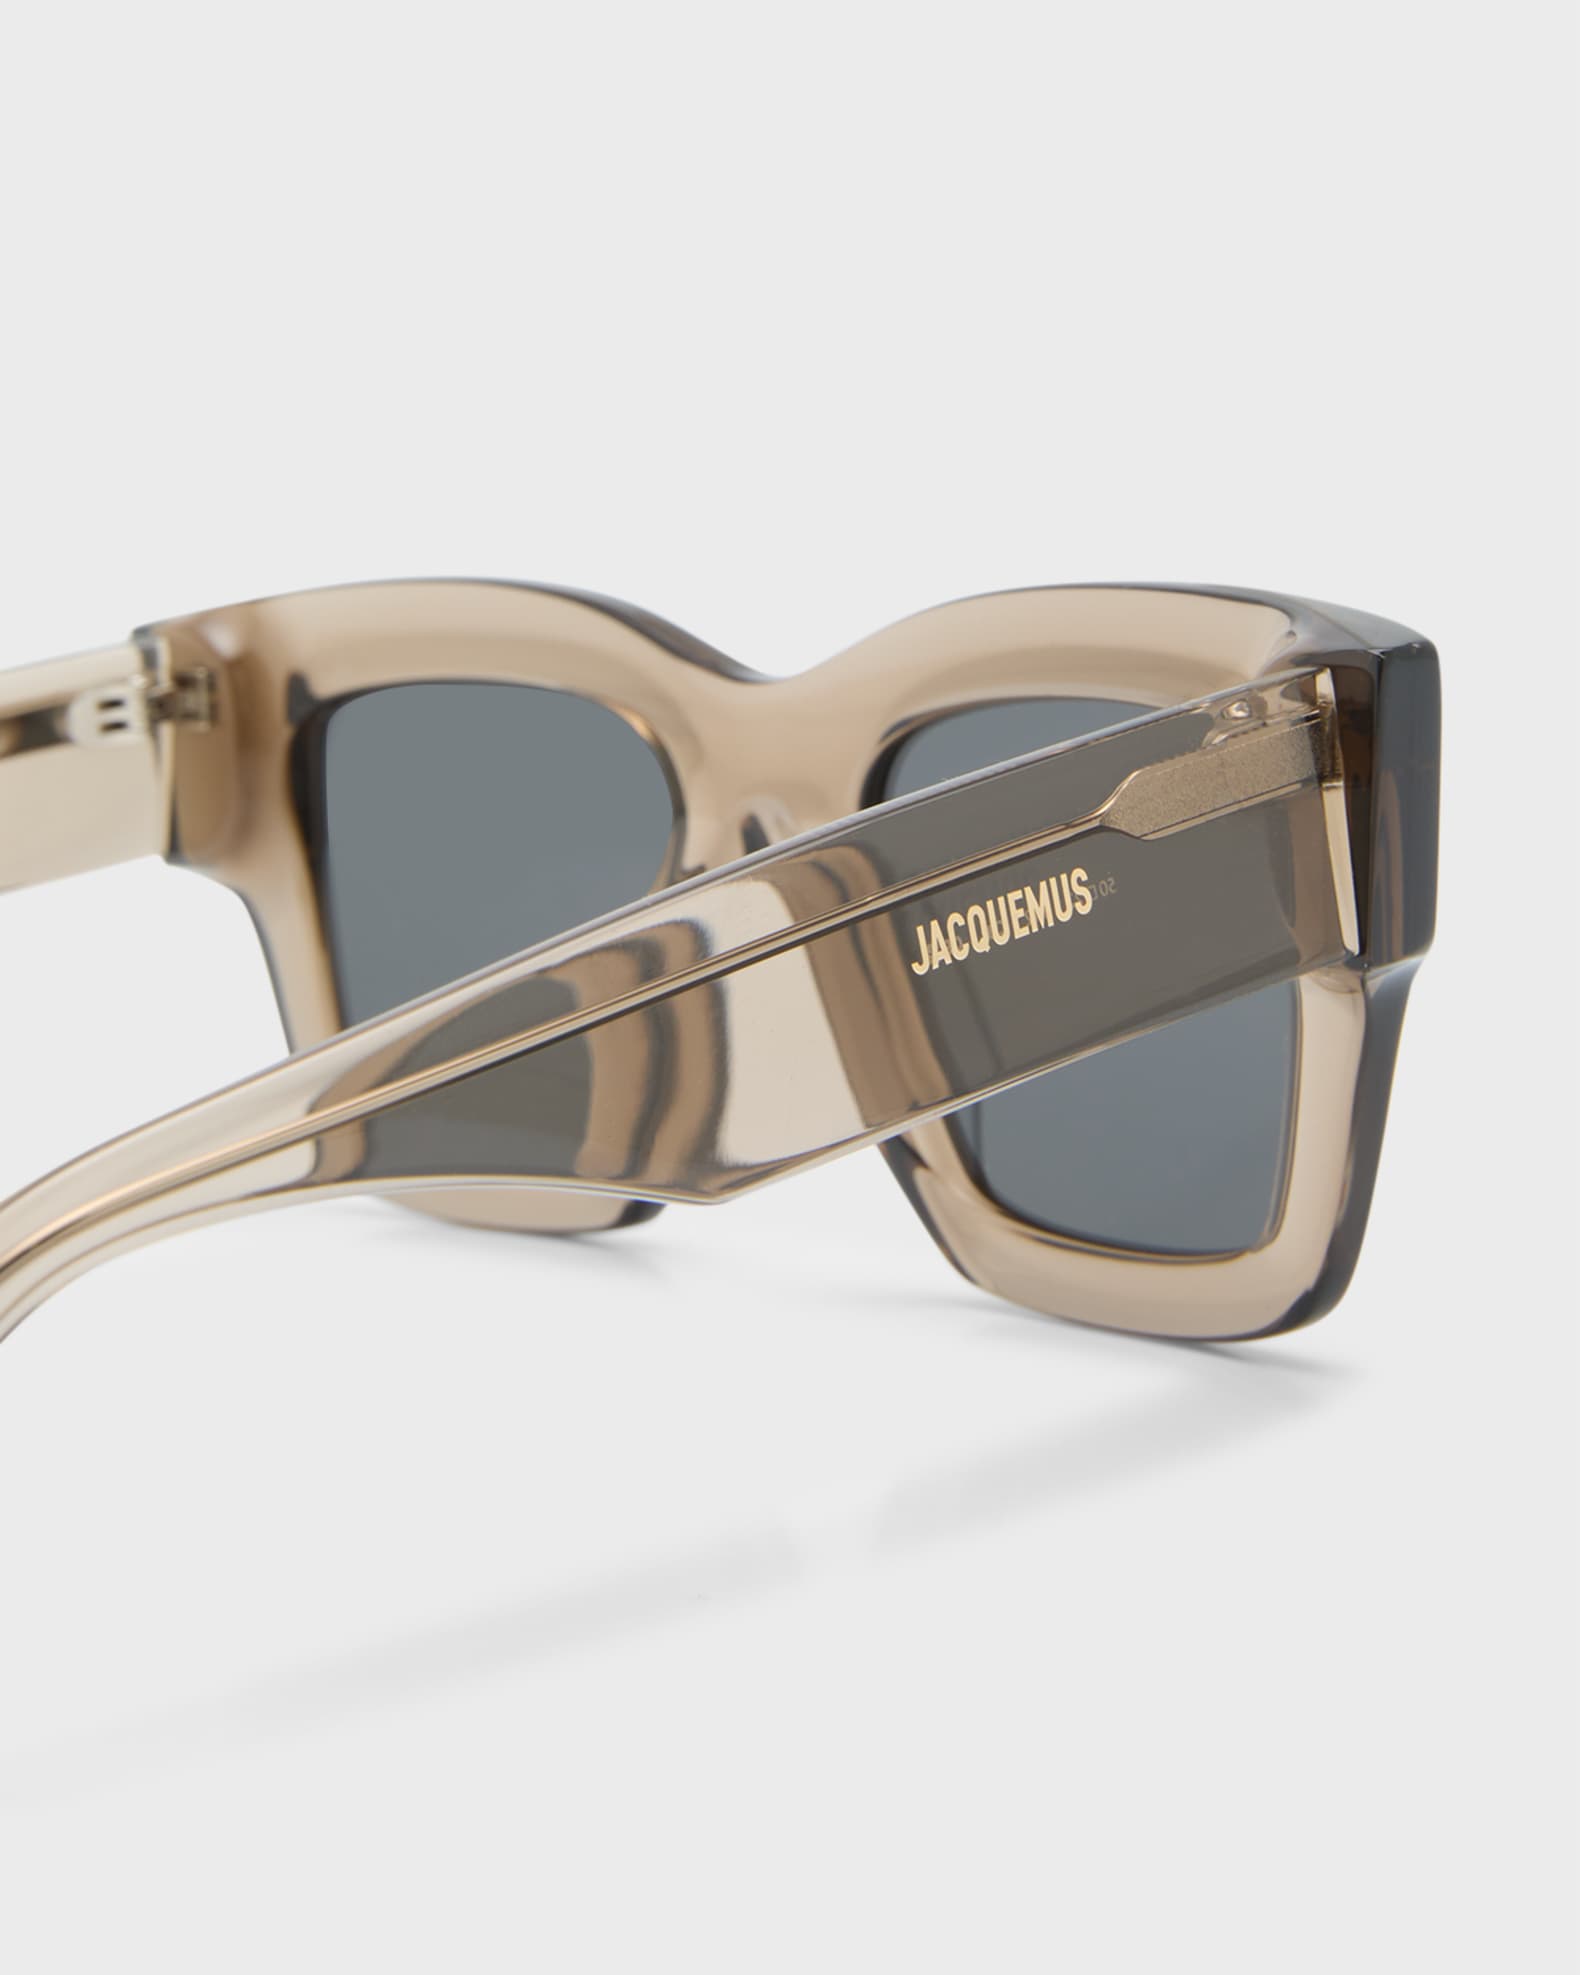 Jacquemus Les Lunettes Baci Acetate Rectangle Sunglasses | Neiman Marcus